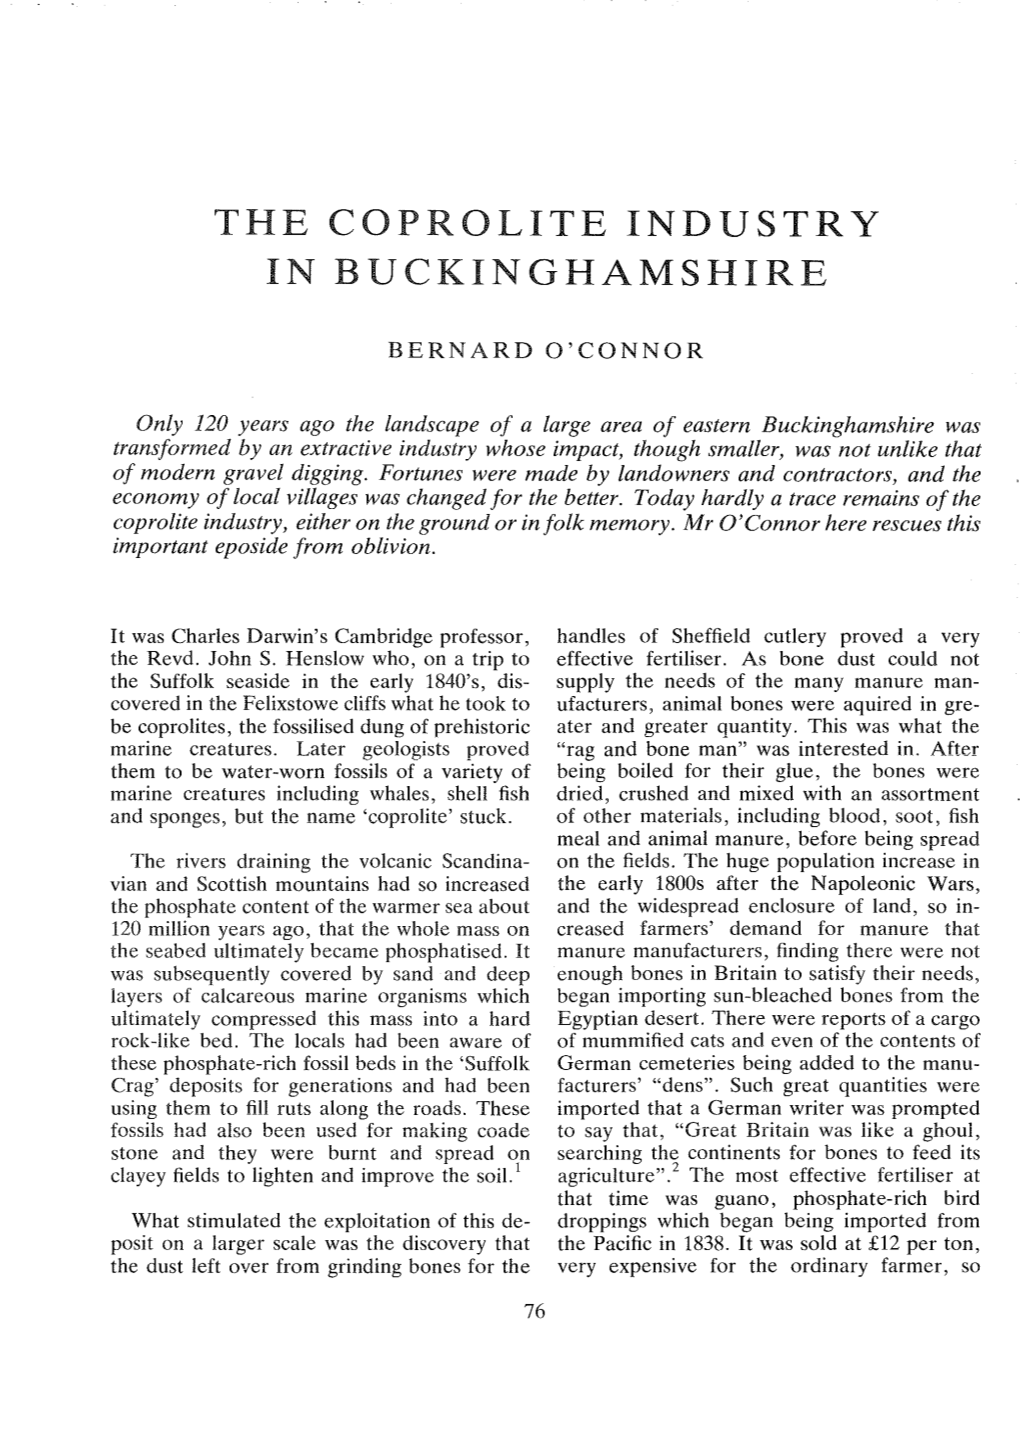 The Coprolite Industry in Buckinghamshire. Bernard O'connor